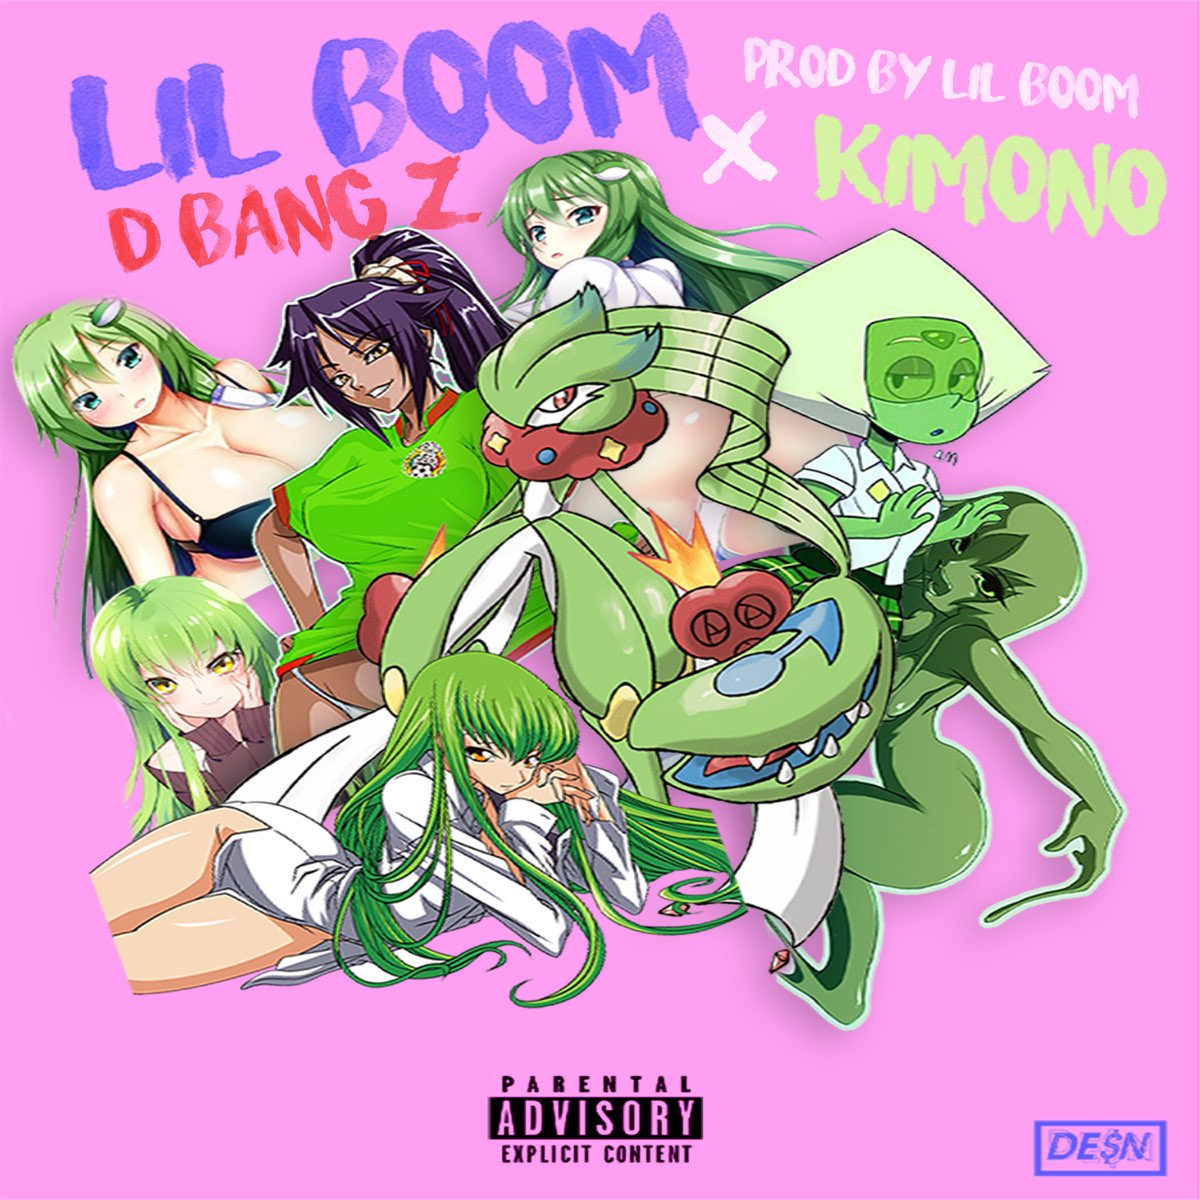 Kimono - Single - Album by Lil Boom & Dbangz - Apple Music